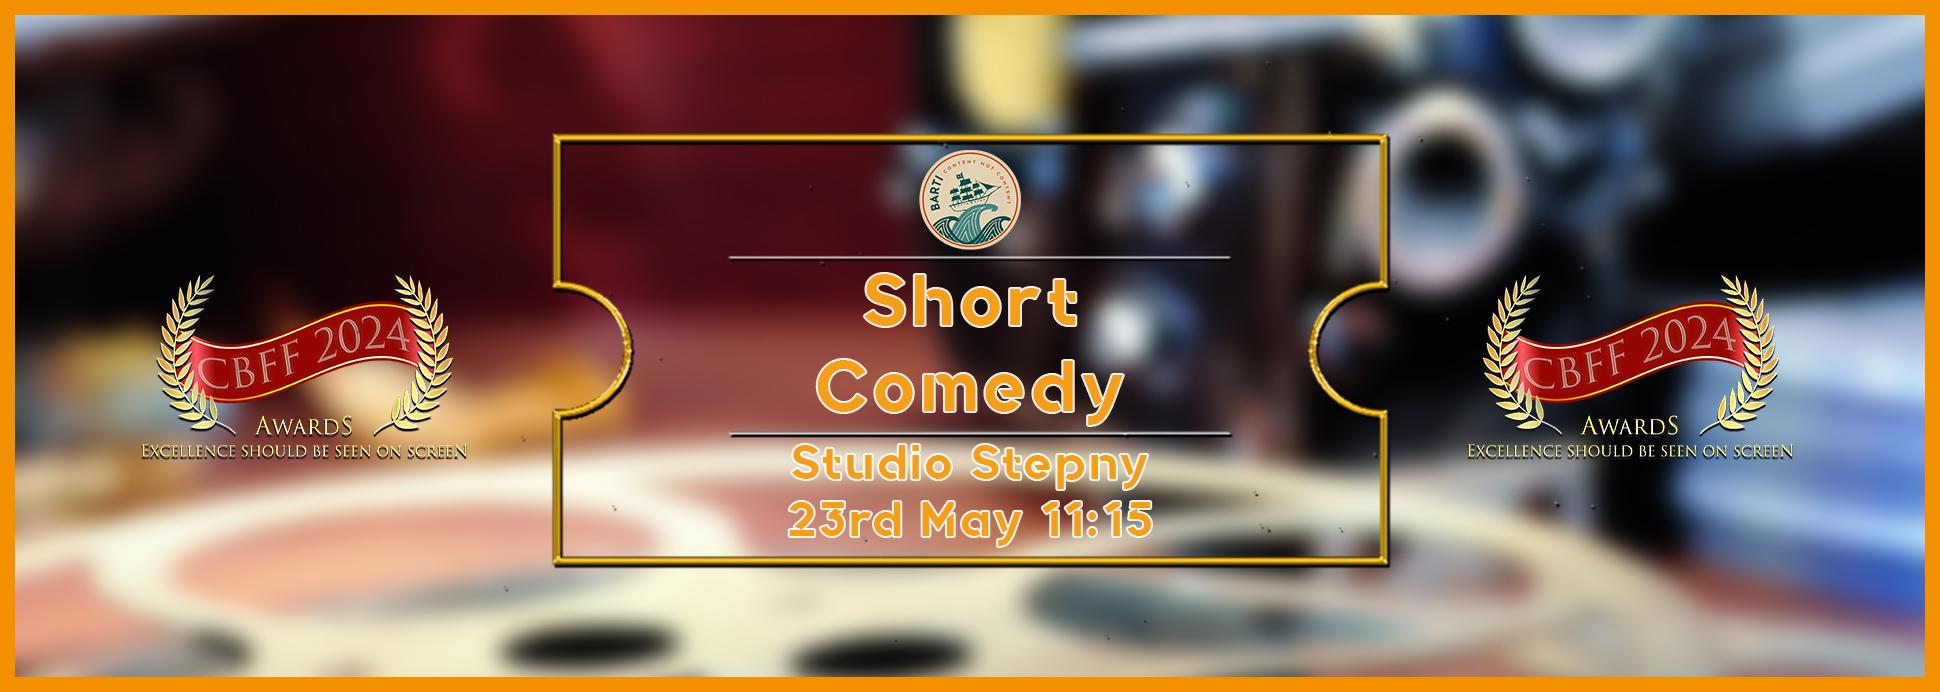 Thursday 23rd 11:15 Studio Stepny Short Comedy